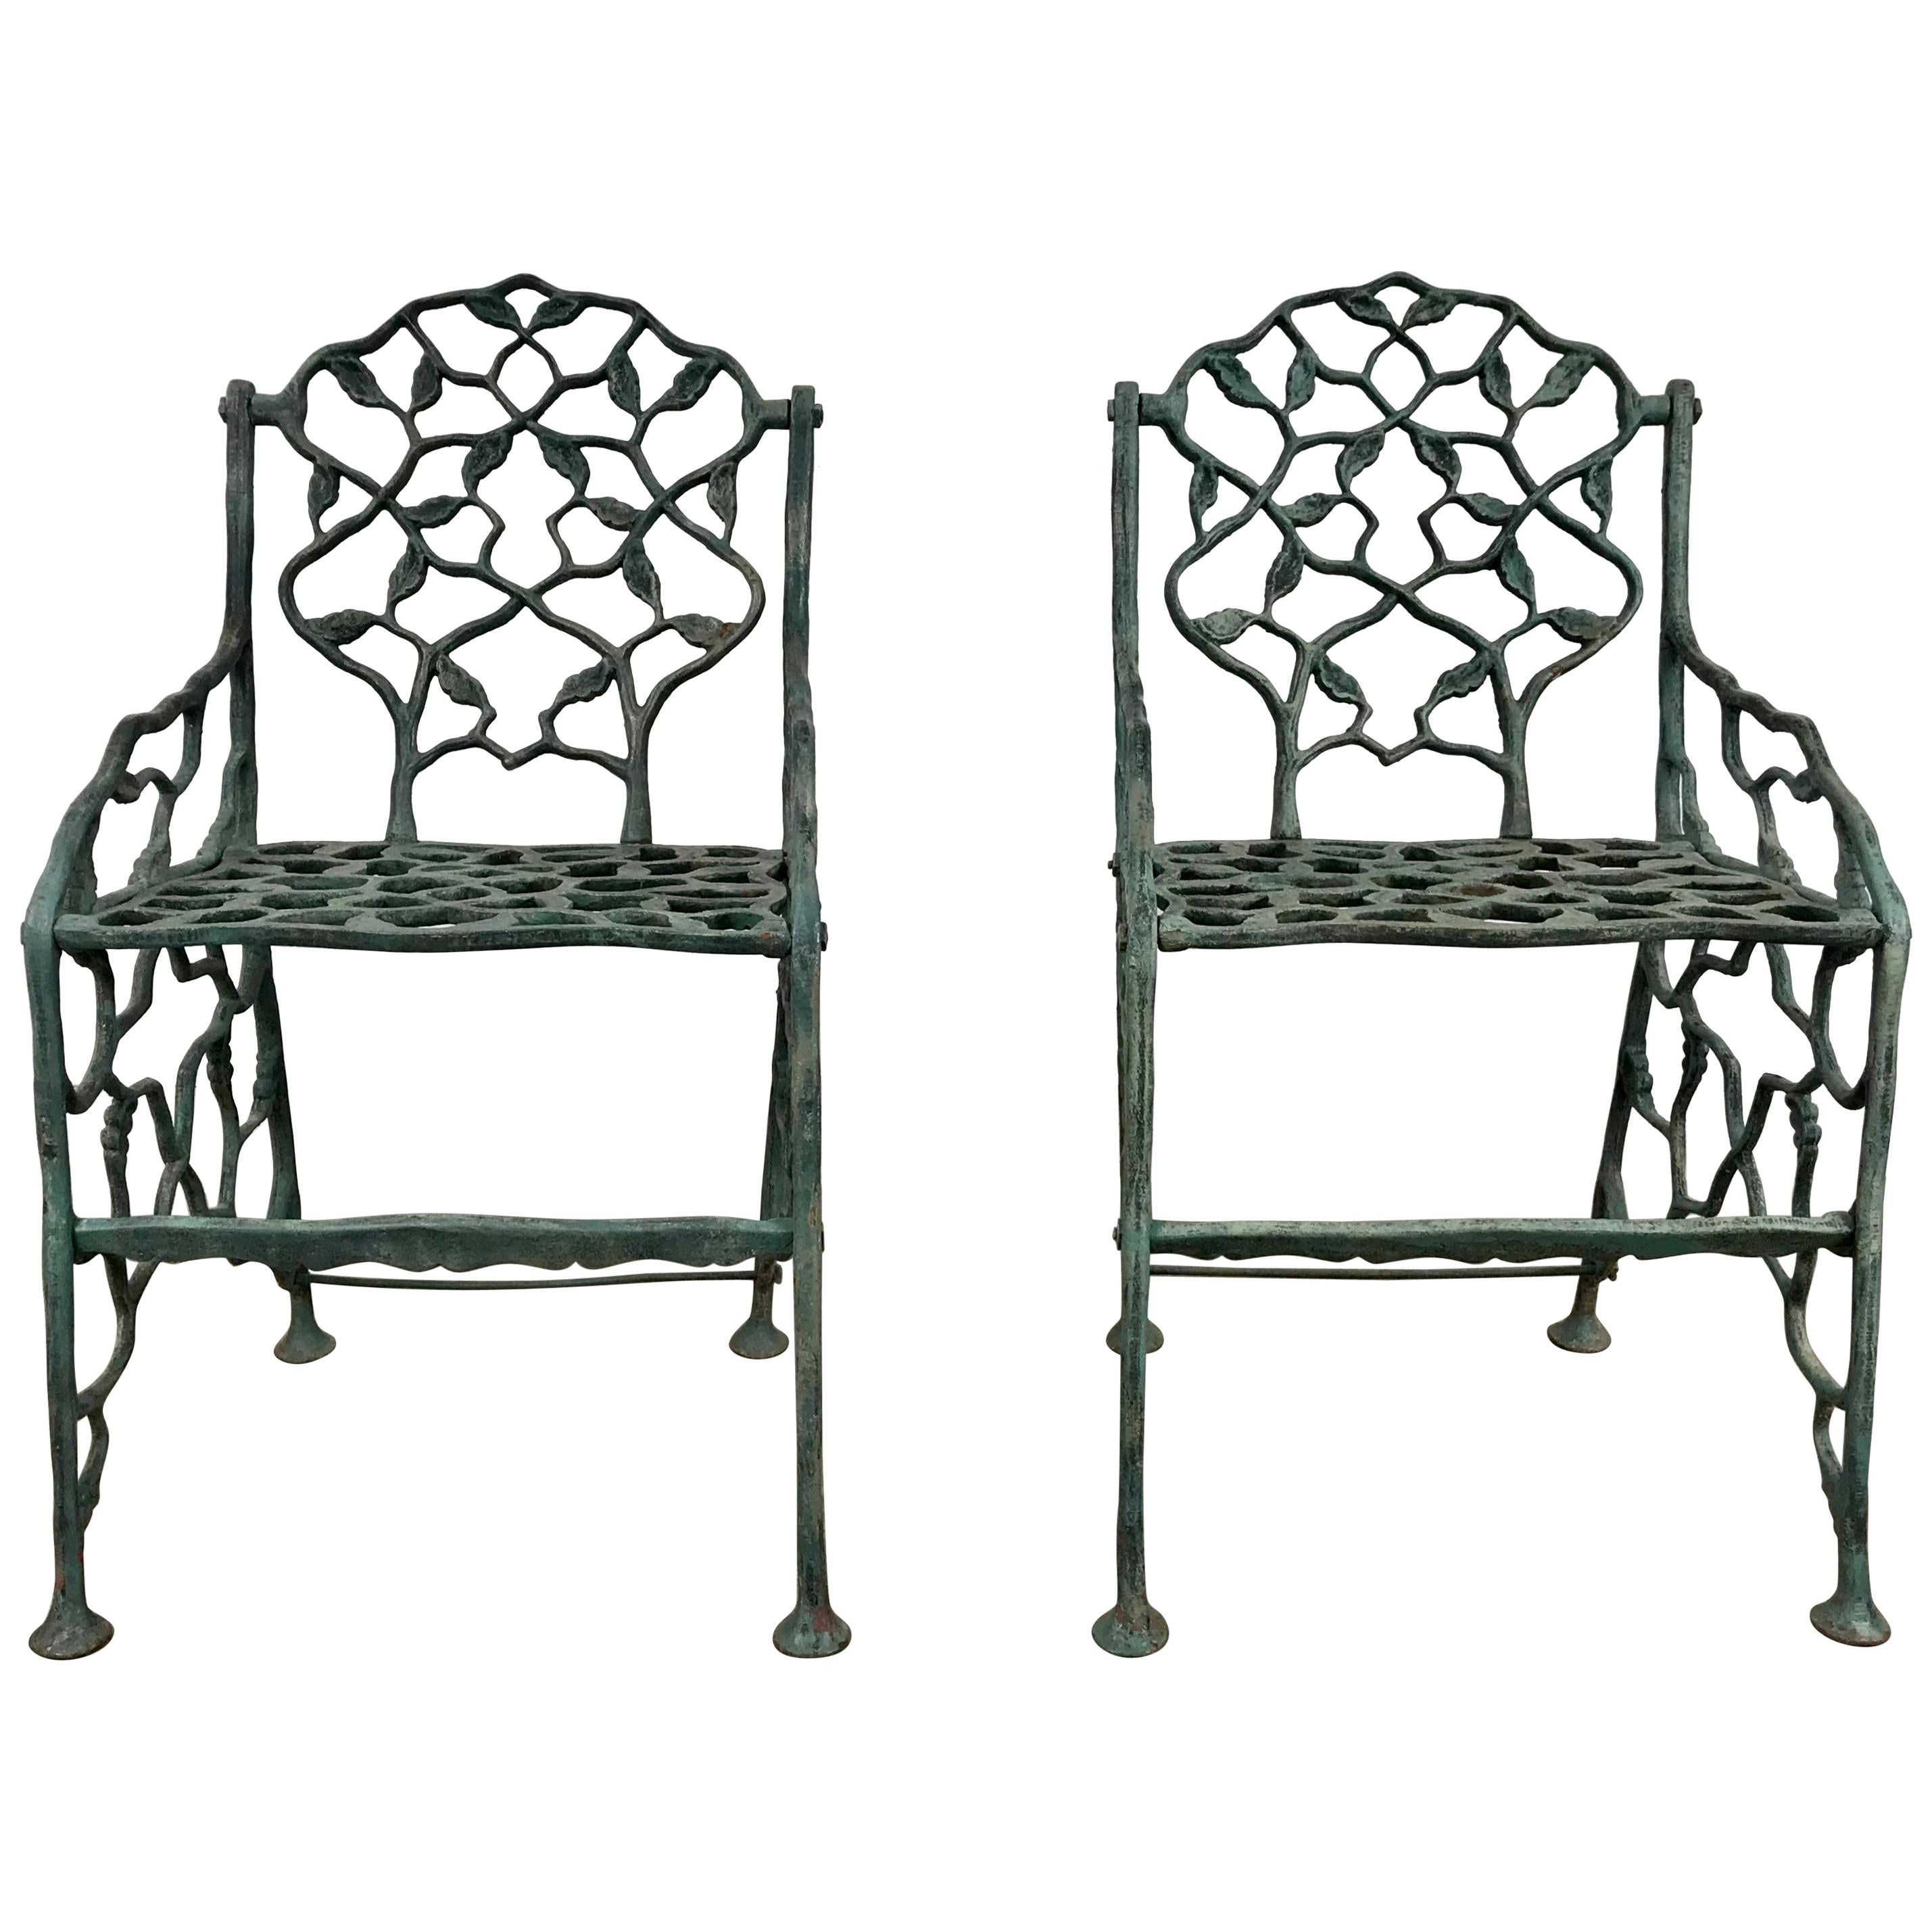 Early Rustic Cast Iron Garden Chairs "Twig" Faux Bois by Fiske